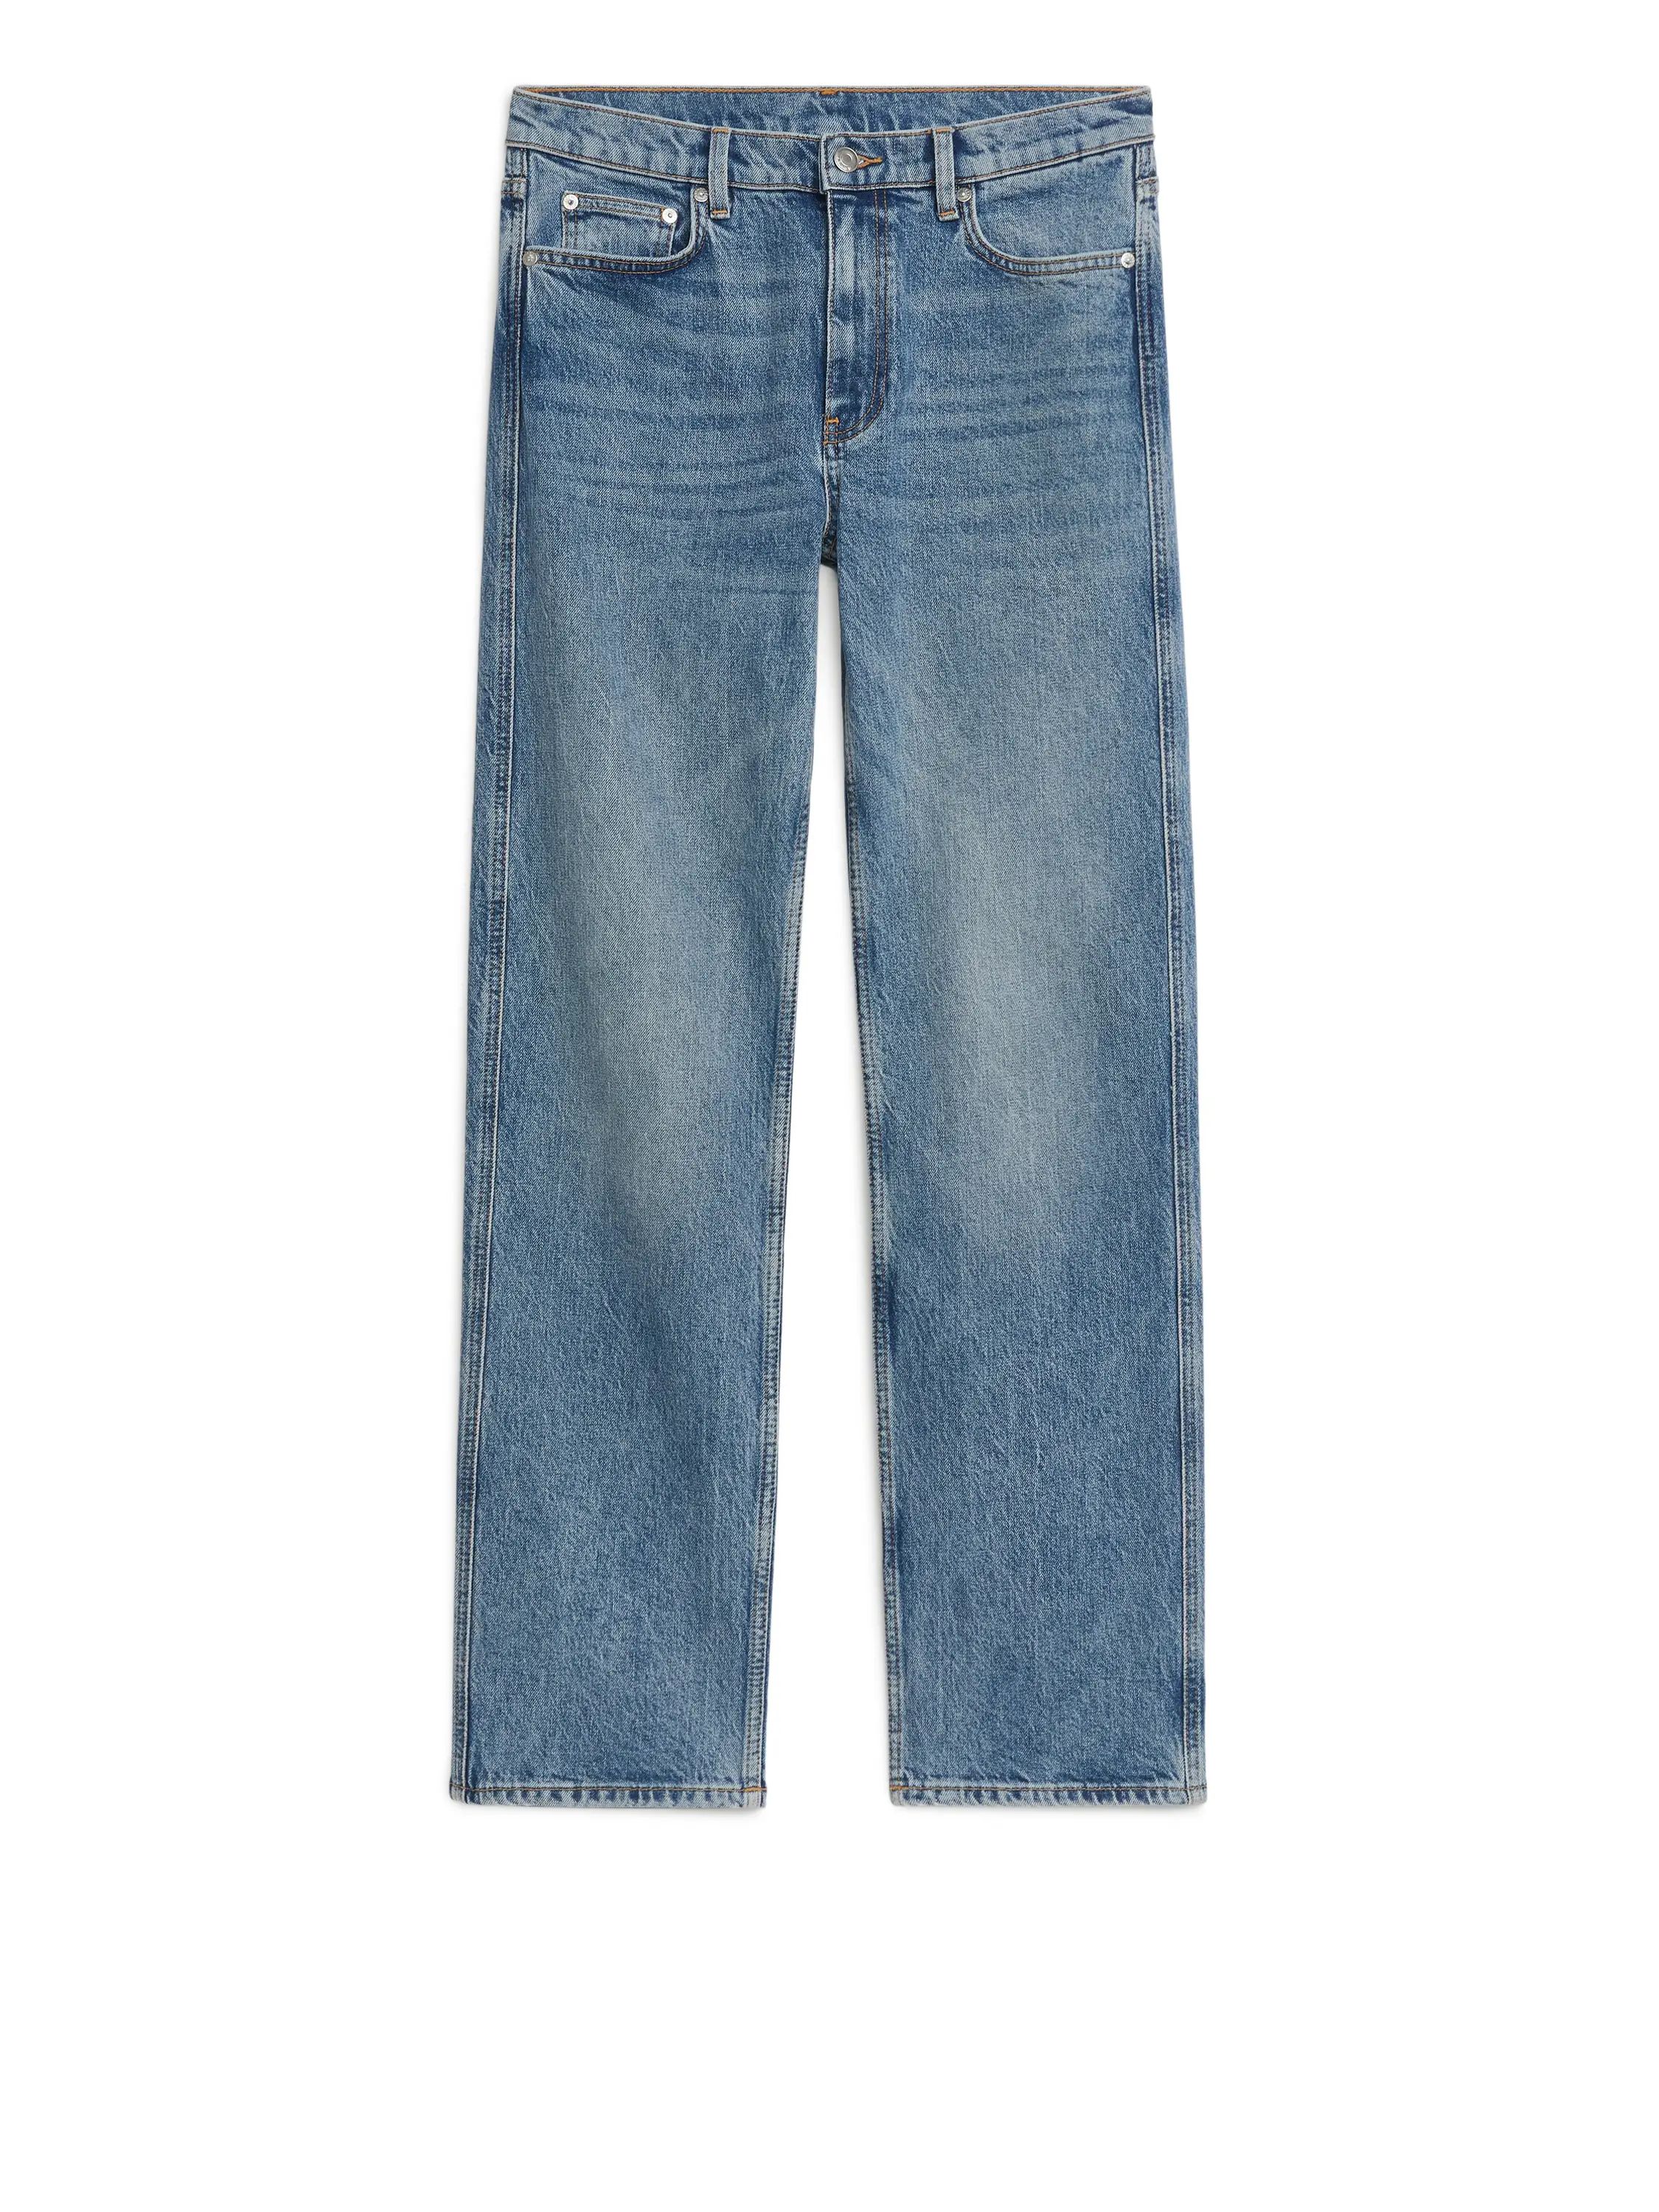 STRAIGHT Stretch Jeans
				
				£69 | ARKET (US&UK)